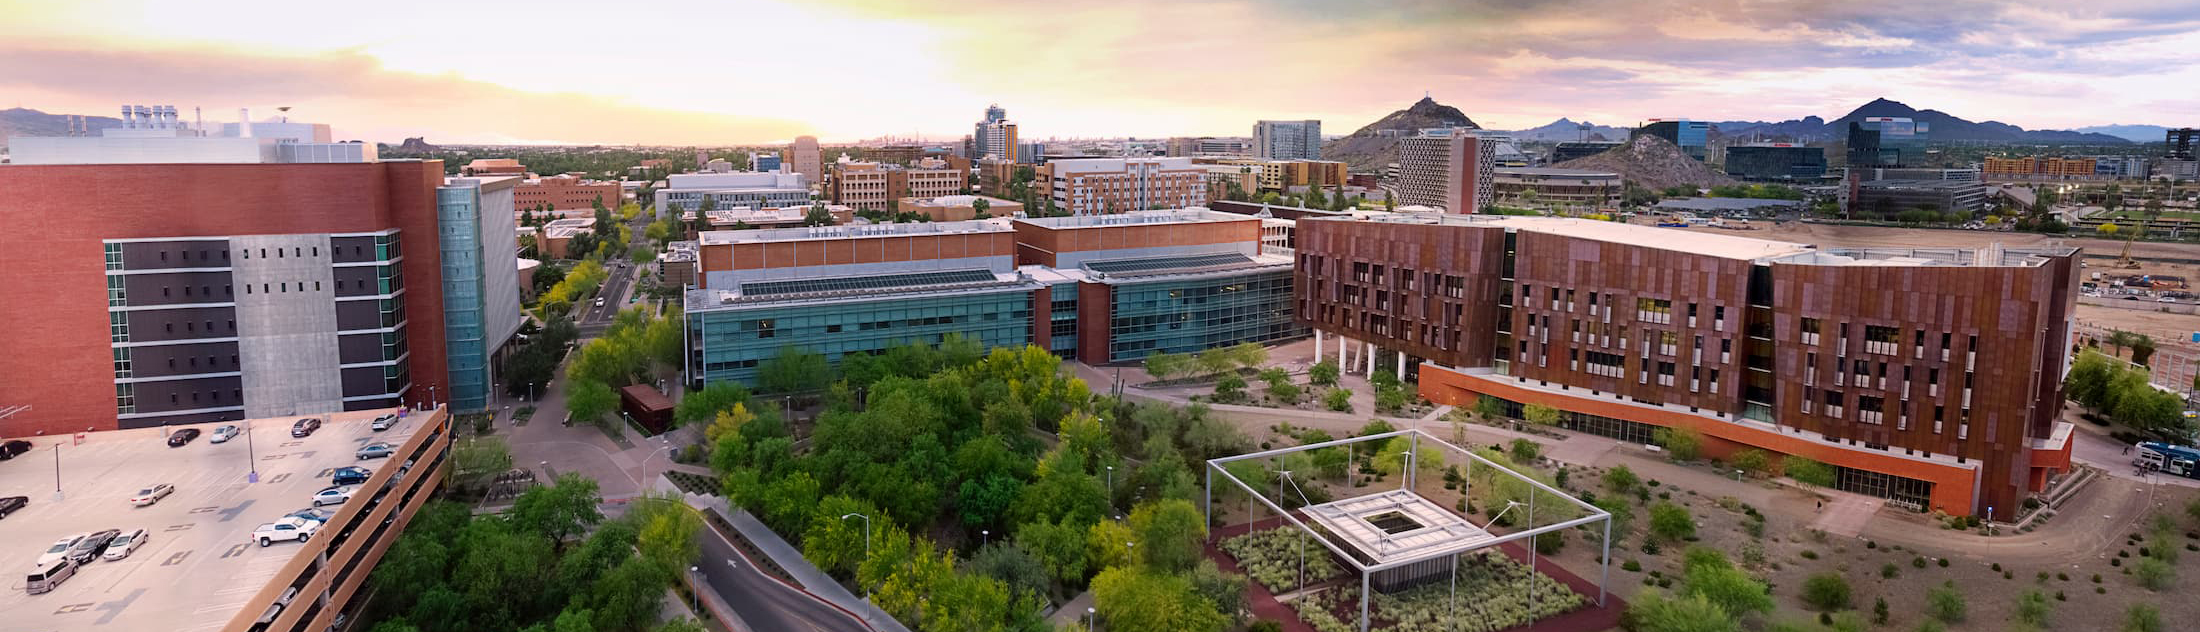 Arizona State University-Tempe